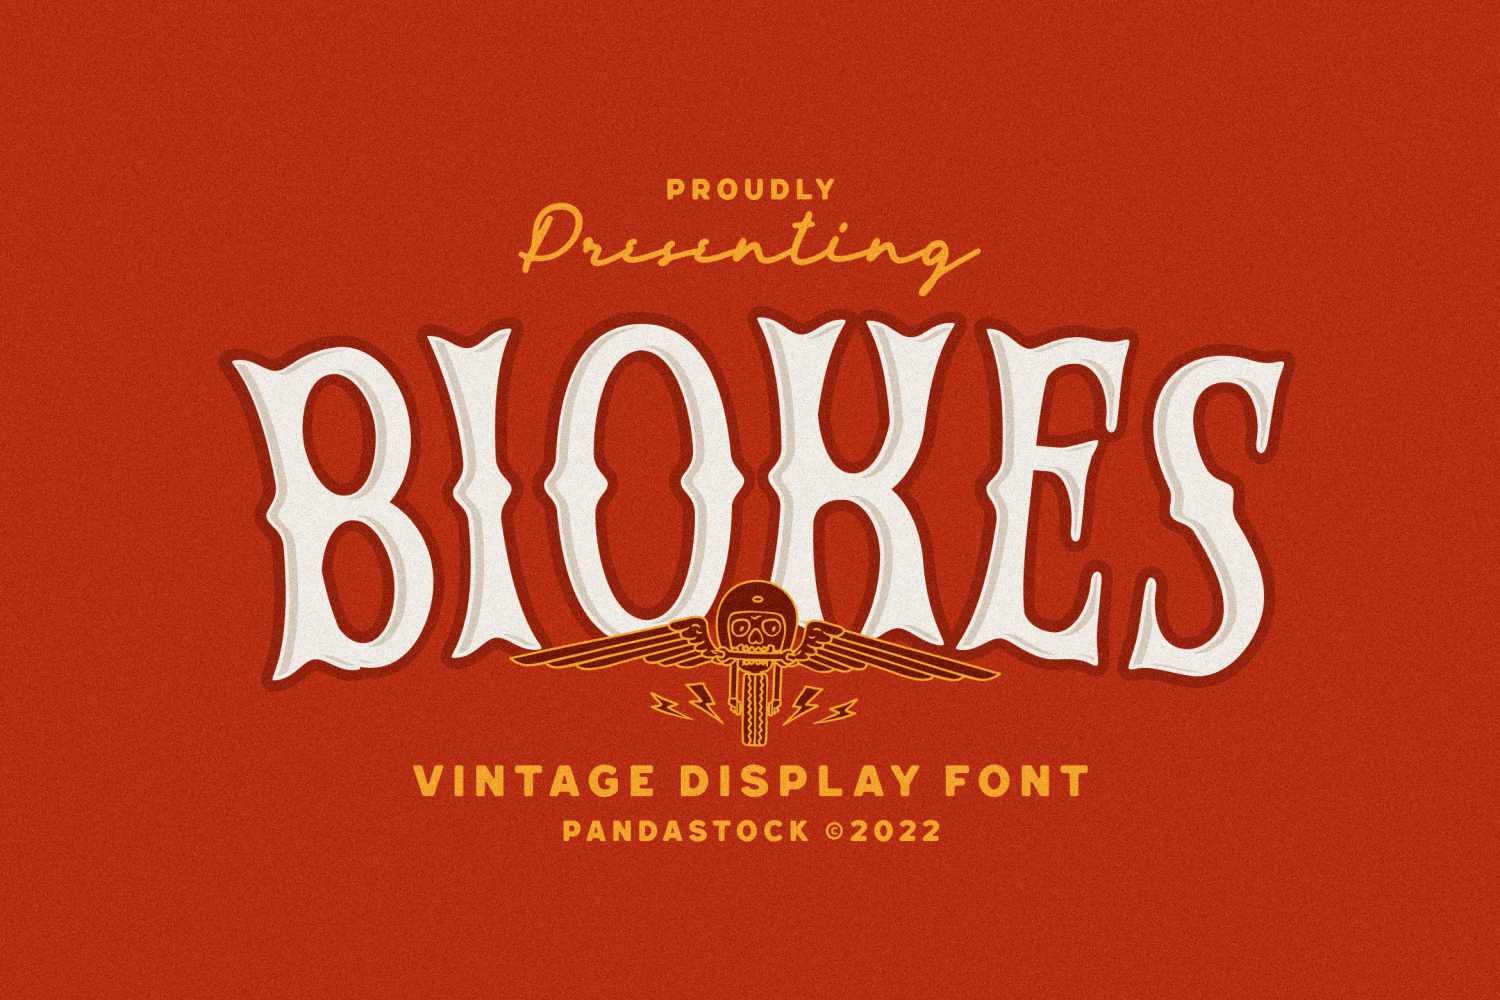 Biokes Vintage Font cover image.